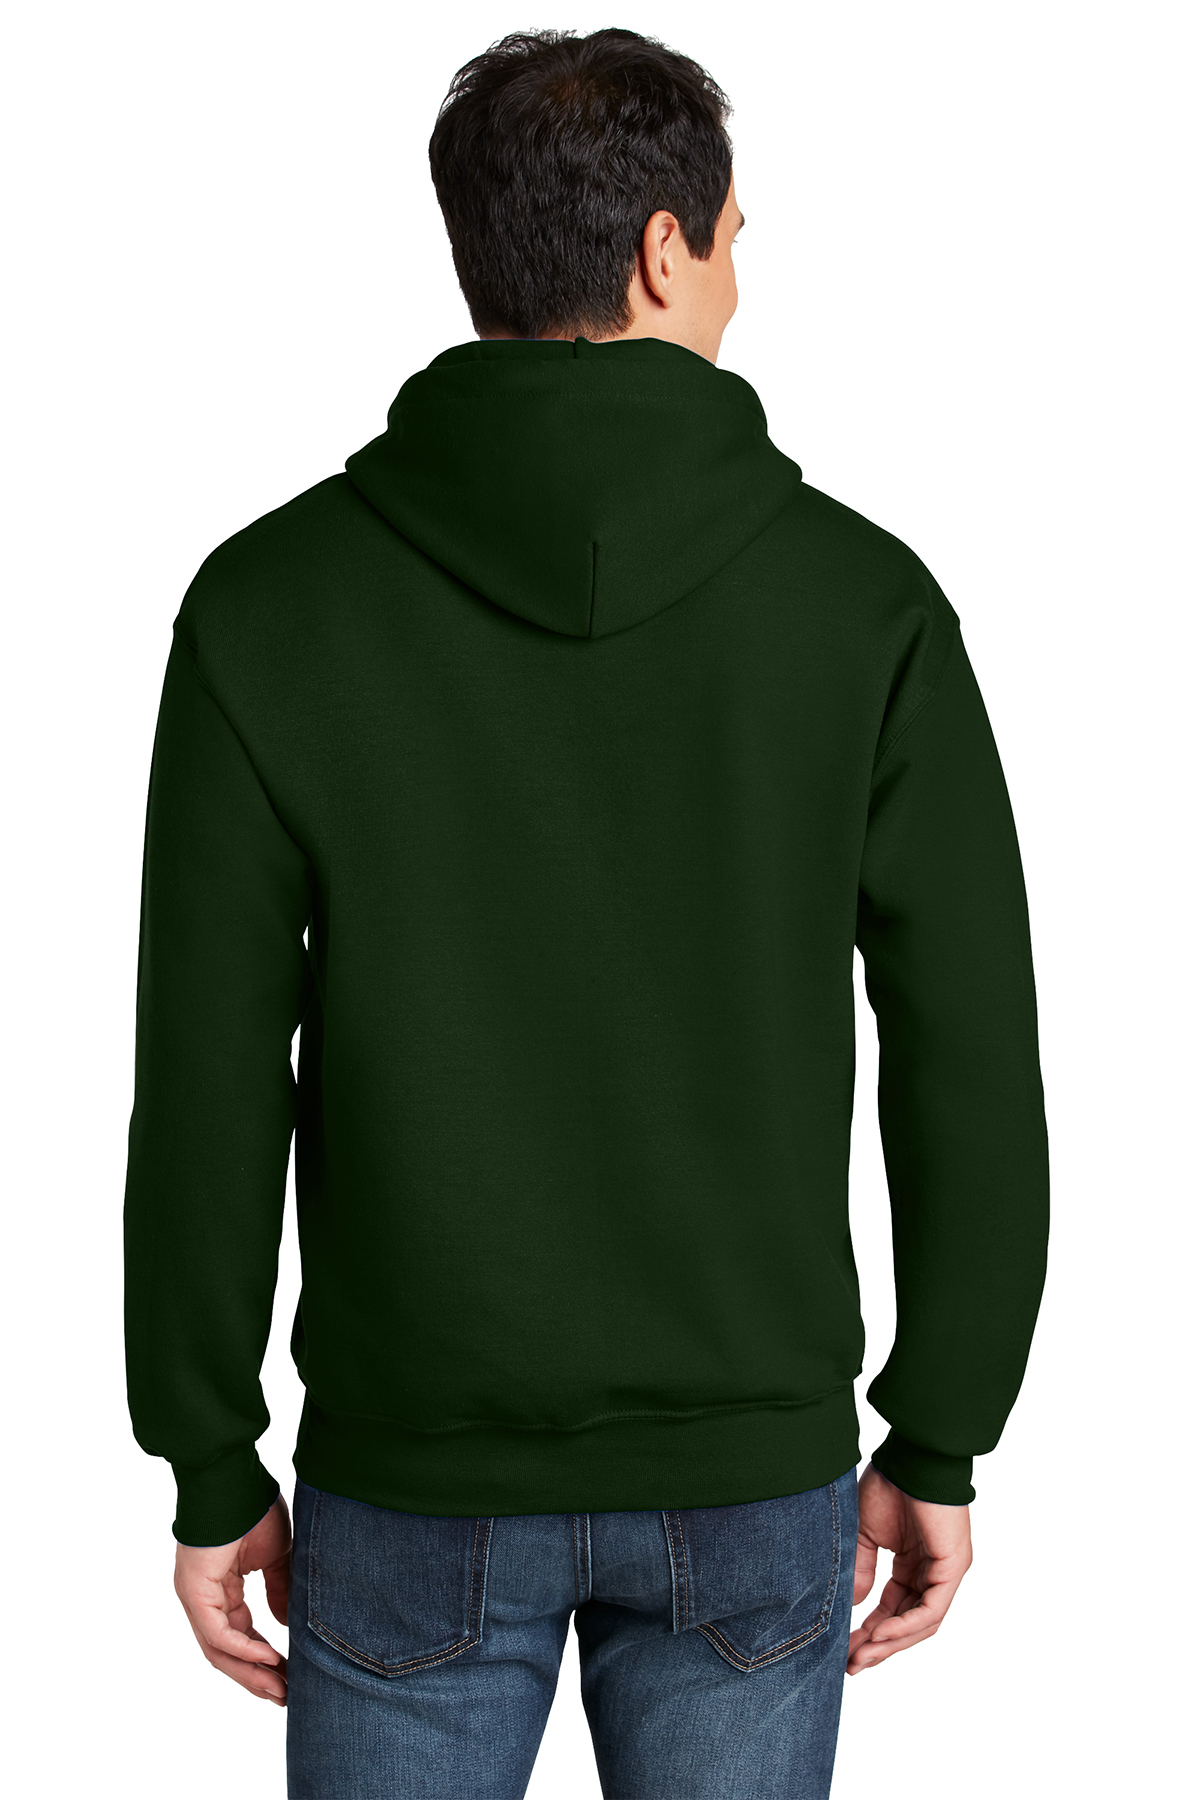 Casuals | - Company DryBlend Sweatshirt Pullover Hooded Gildan Product |